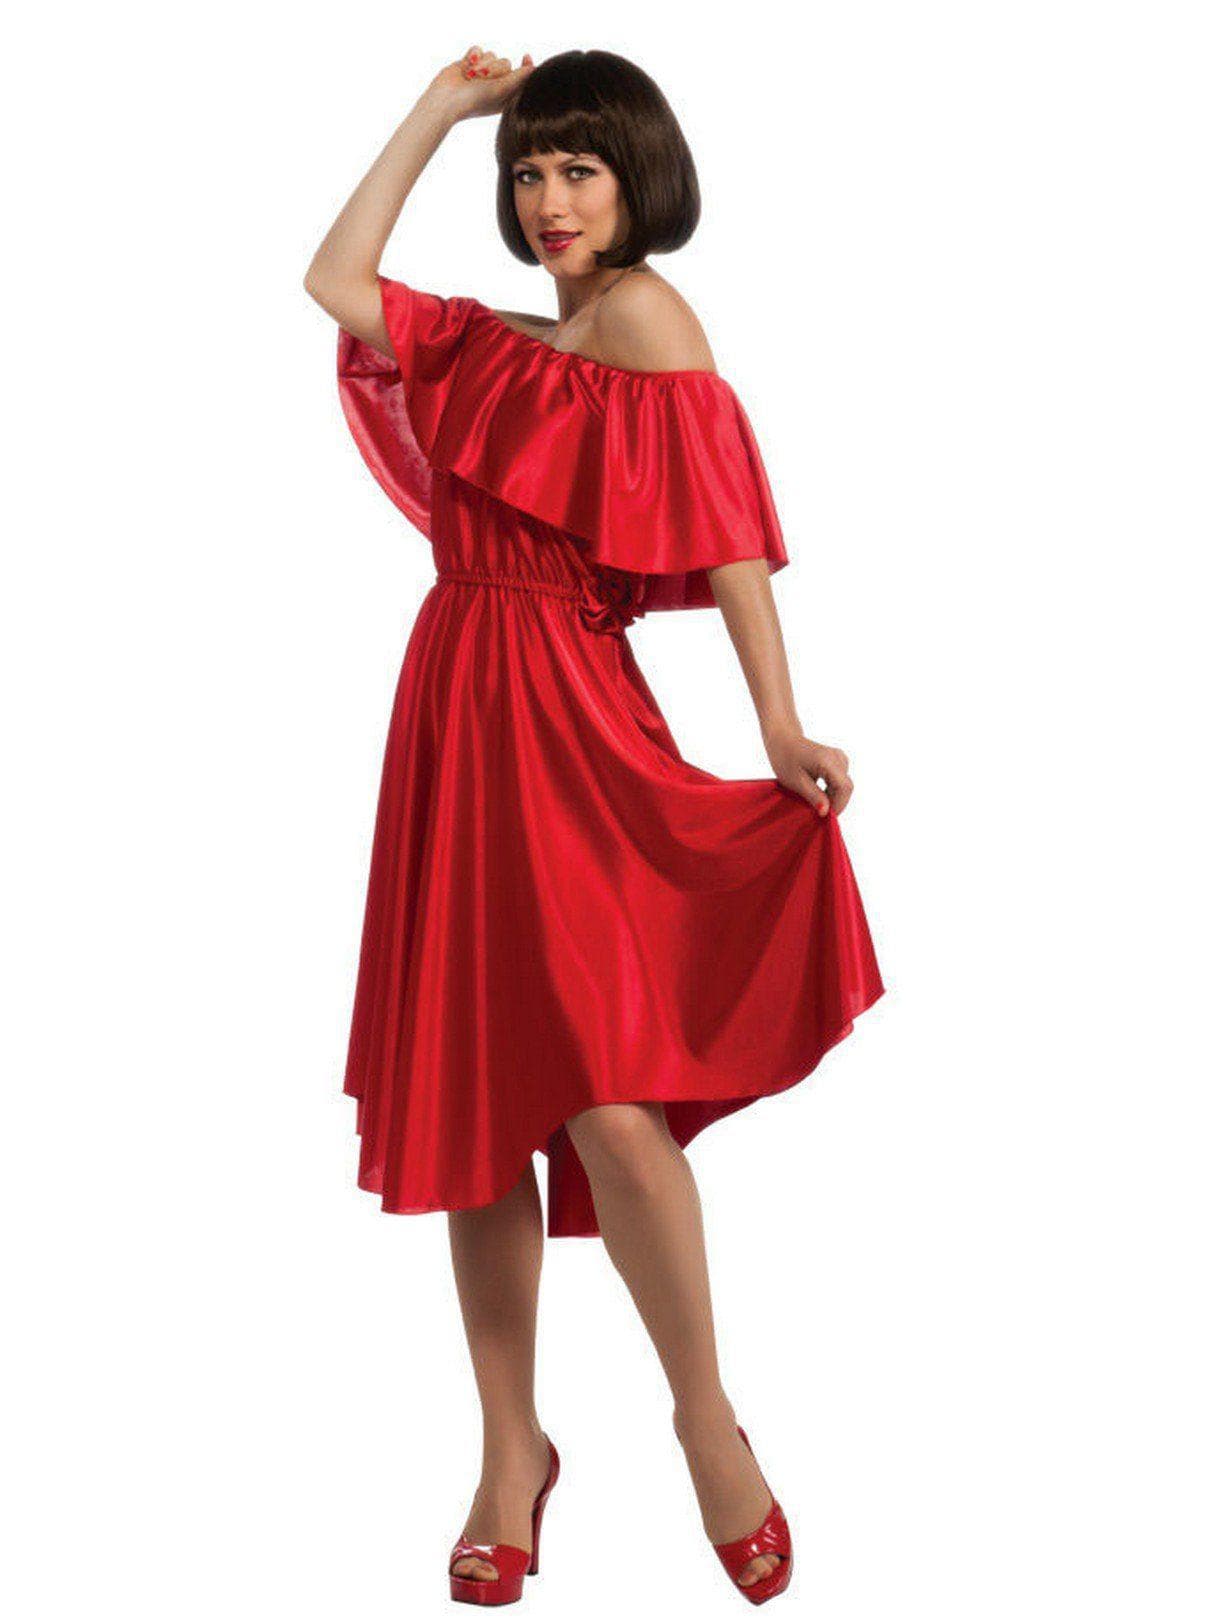 Adult Saturday Night Fever Red Dress Costume - costumes.com